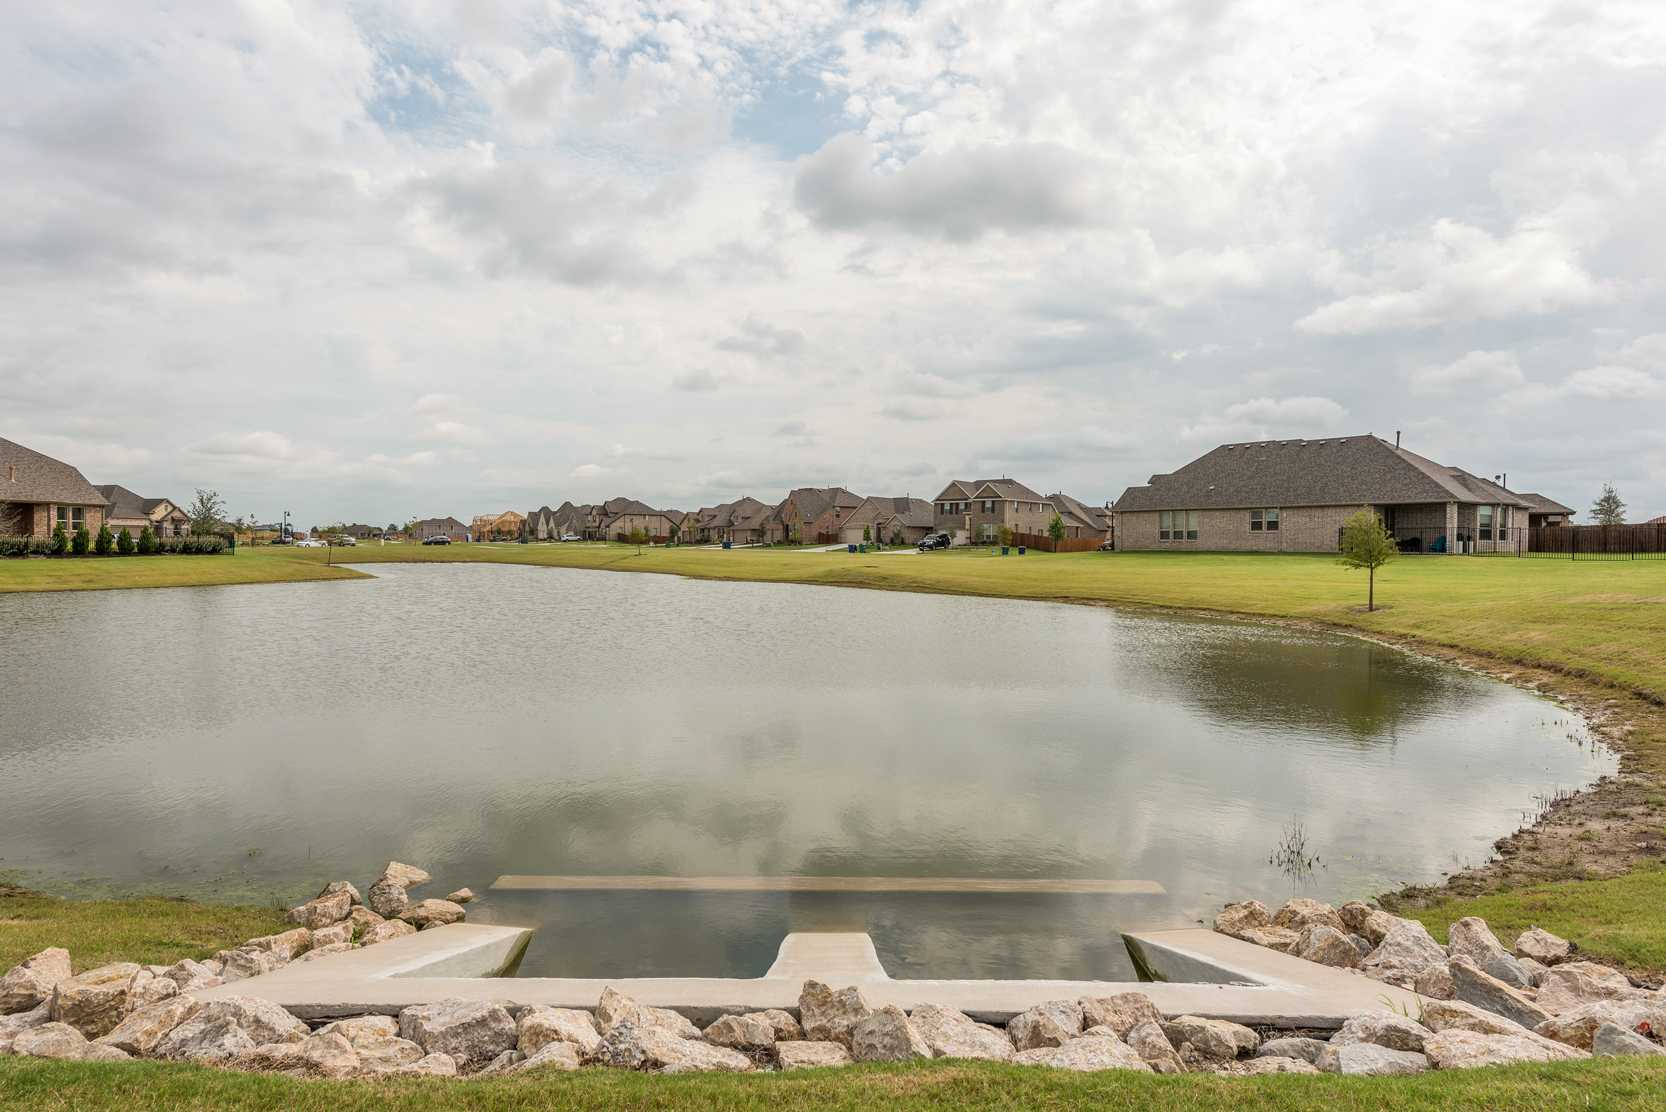 New Homes in Parkside - Celina - Home Builder in Celina TX